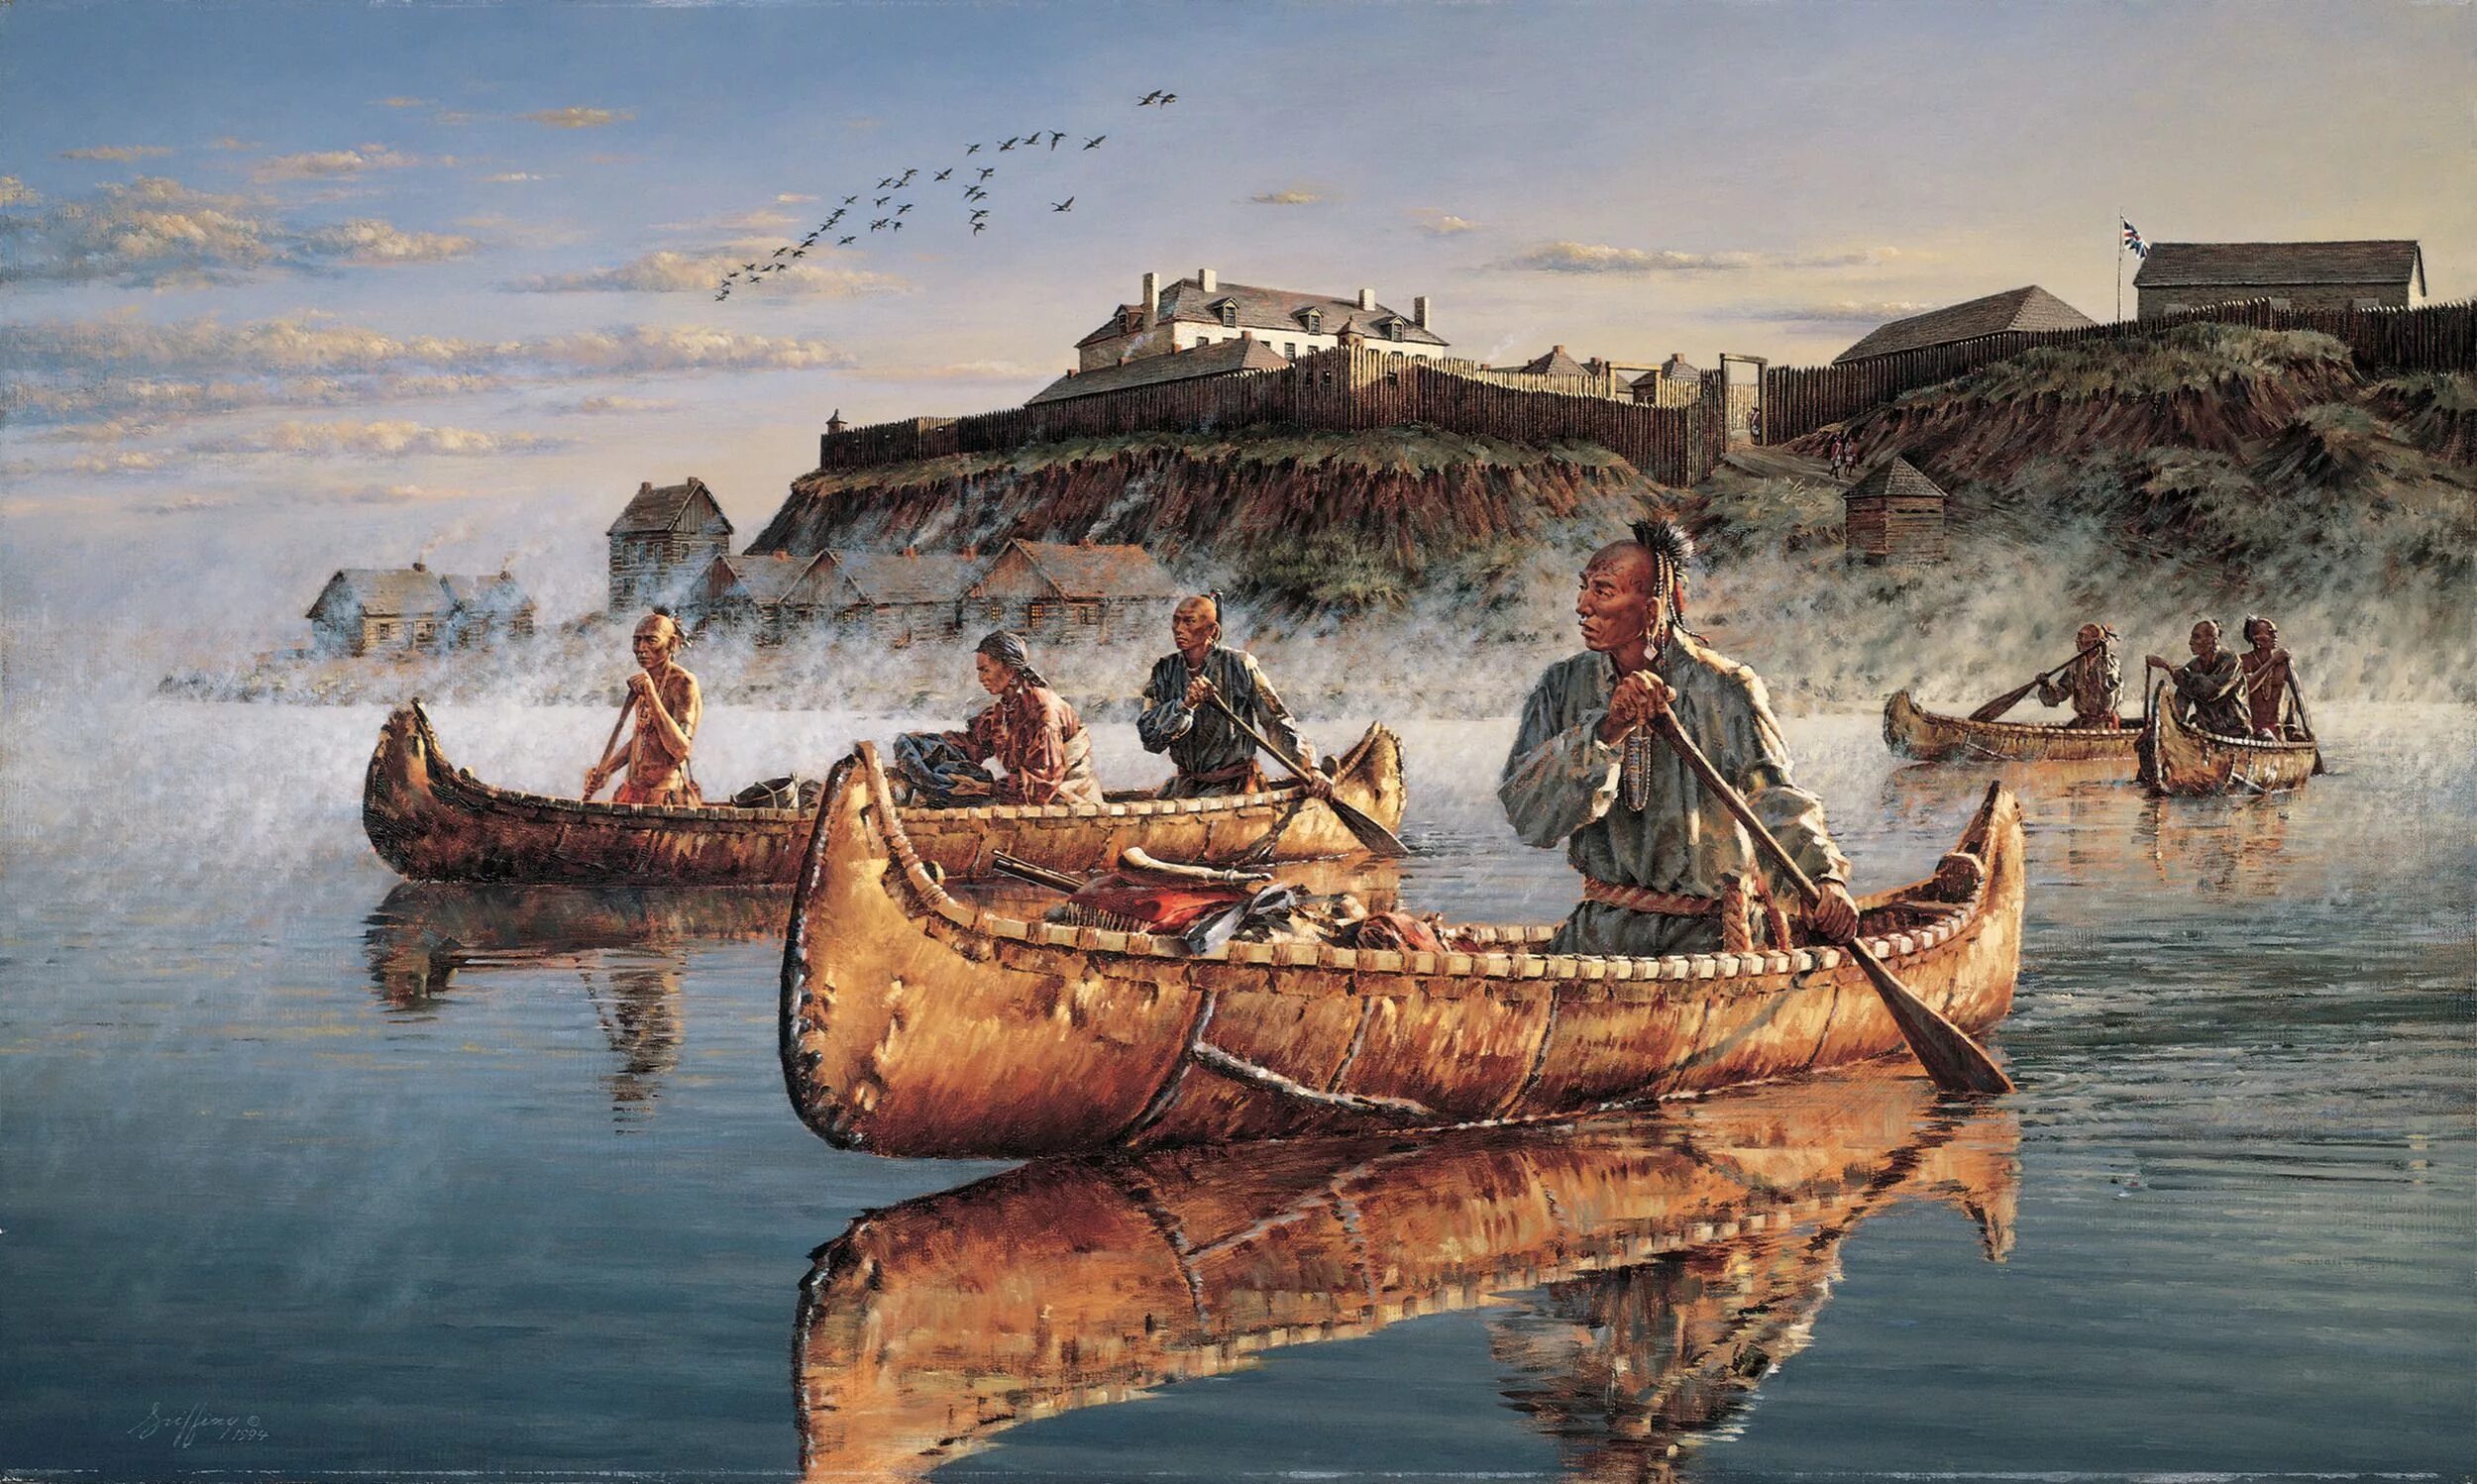 French americans. Каноэ индейцев Северной Америки. Лодки индейцев Южной Америки. Каноэ (индейские пироги).